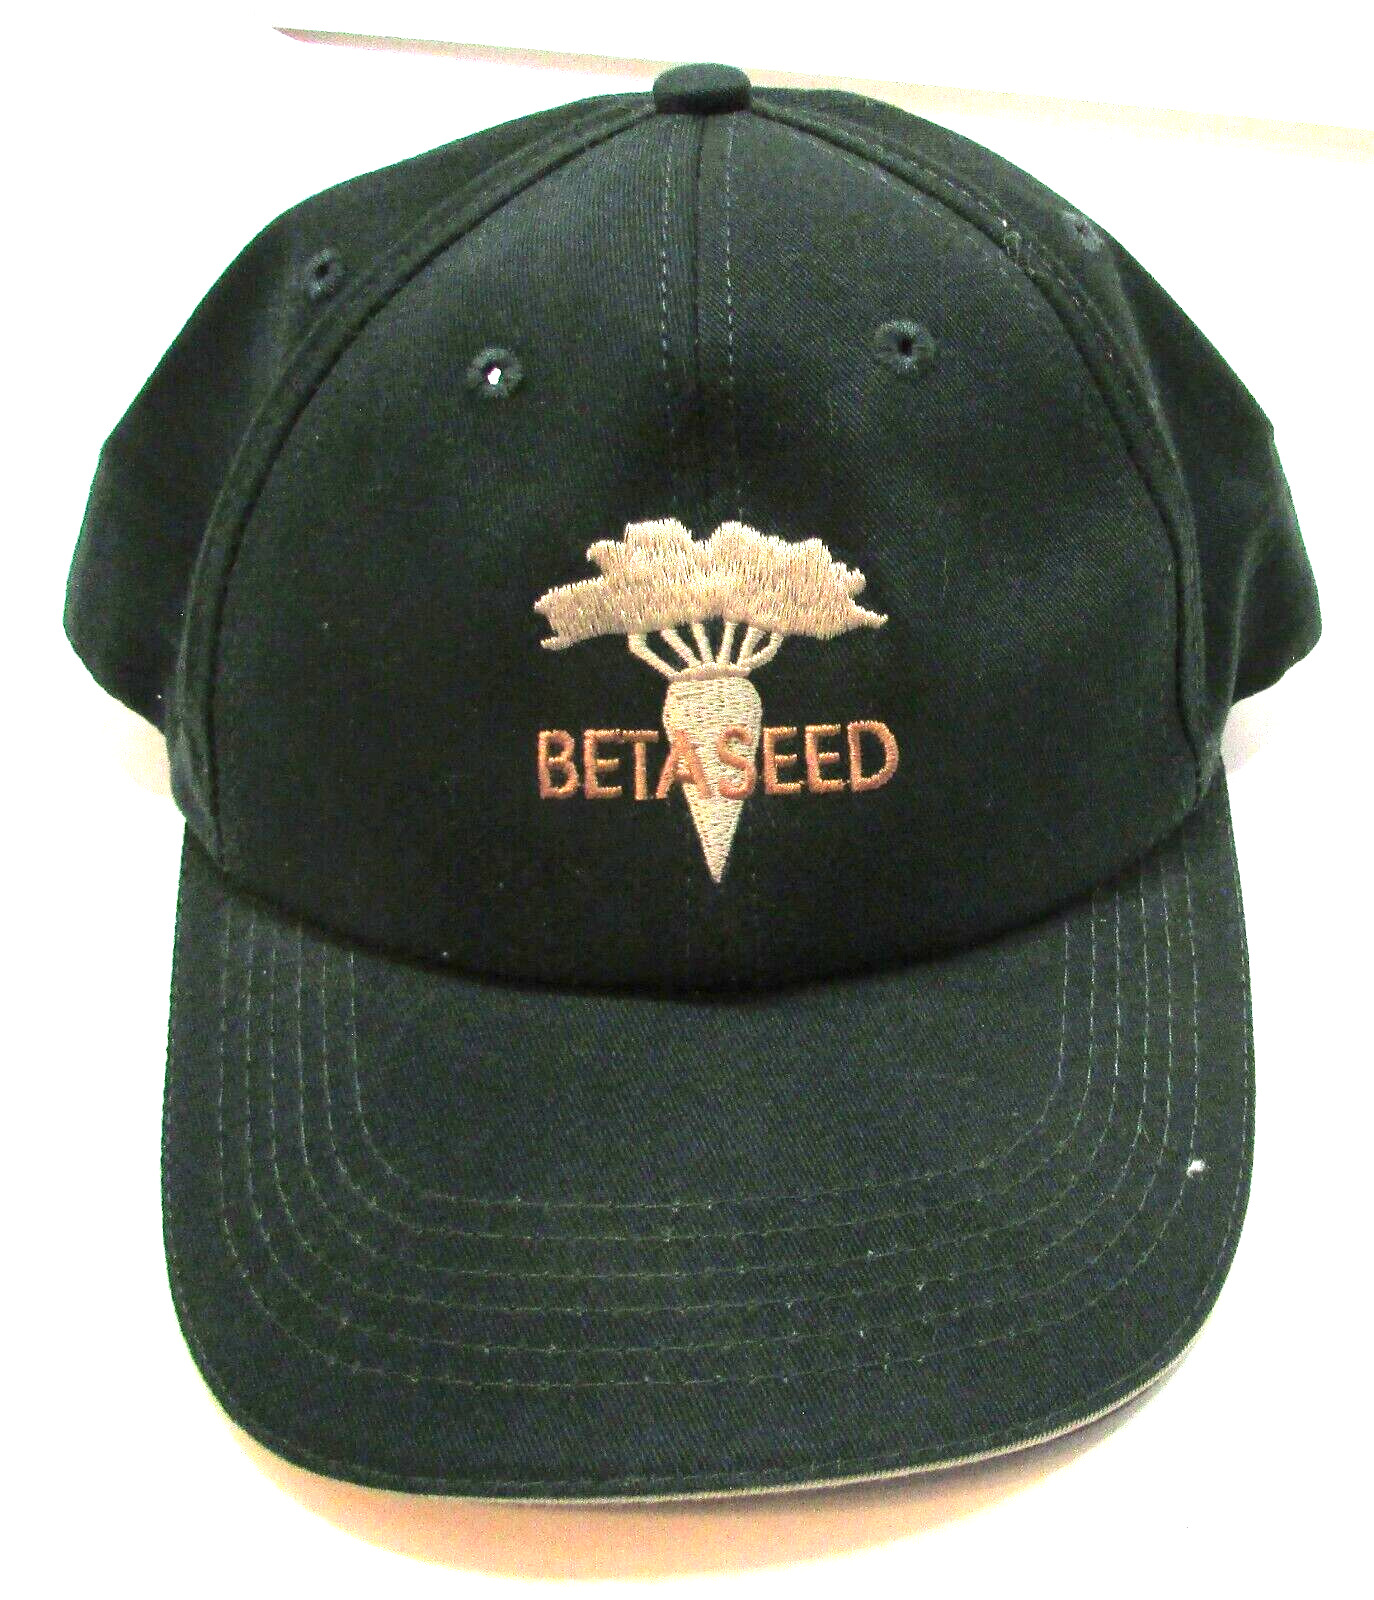 Vintage 1990s USA Betaseed Sugarbeet Green Cotton Farm Seed Ball Cap Trucker Hat